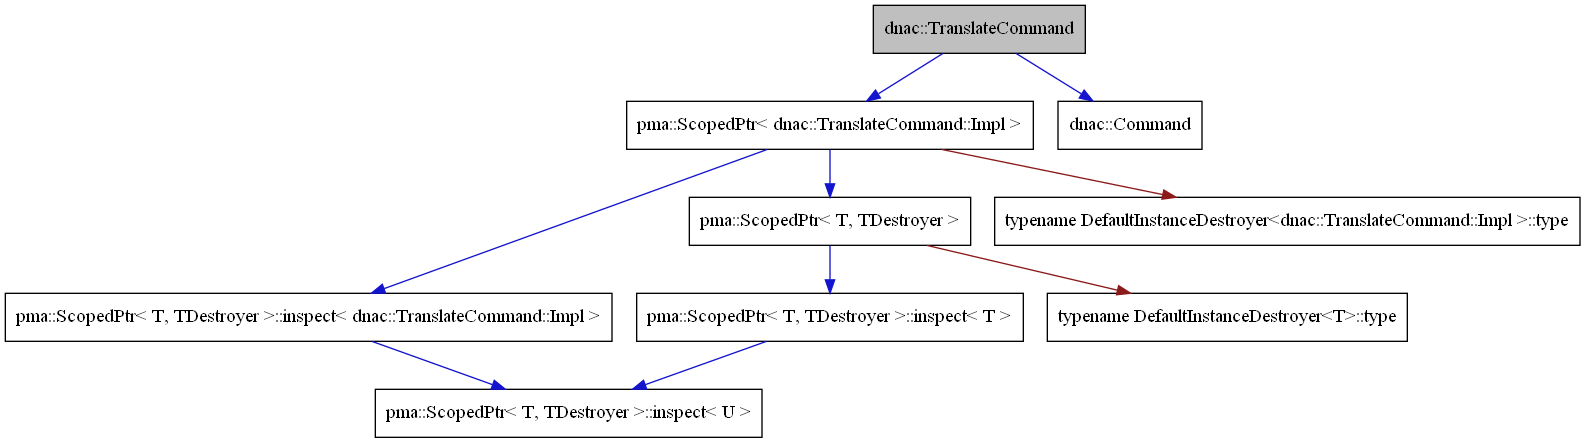 digraph {
    graph [bgcolor="#00000000"]
    node [shape=rectangle style=filled fillcolor="#FFFFFF" font=Helvetica padding=2]
    edge [color="#1414CE"]
    "3" [label="pma::ScopedPtr< dnac::TranslateCommand::Impl >" tooltip="pma::ScopedPtr< dnac::TranslateCommand::Impl >"]
    "2" [label="dnac::Command" tooltip="dnac::Command"]
    "1" [label="dnac::TranslateCommand" tooltip="dnac::TranslateCommand" fillcolor="#BFBFBF"]
    "9" [label="pma::ScopedPtr< T, TDestroyer >::inspect< T >" tooltip="pma::ScopedPtr< T, TDestroyer >::inspect< T >"]
    "5" [label="pma::ScopedPtr< T, TDestroyer >::inspect< dnac::TranslateCommand::Impl >" tooltip="pma::ScopedPtr< T, TDestroyer >::inspect< dnac::TranslateCommand::Impl >"]
    "7" [label="pma::ScopedPtr< T, TDestroyer >" tooltip="pma::ScopedPtr< T, TDestroyer >"]
    "6" [label="pma::ScopedPtr< T, TDestroyer >::inspect< U >" tooltip="pma::ScopedPtr< T, TDestroyer >::inspect< U >"]
    "8" [label="typename DefaultInstanceDestroyer<T>::type" tooltip="typename DefaultInstanceDestroyer<T>::type"]
    "4" [label="typename DefaultInstanceDestroyer<dnac::TranslateCommand::Impl >::type" tooltip="typename DefaultInstanceDestroyer<dnac::TranslateCommand::Impl >::type"]
    "3" -> "4" [dir=forward tooltip="private-inheritance" color="#8B1A1A"]
    "3" -> "5" [dir=forward tooltip="usage"]
    "3" -> "7" [dir=forward tooltip="template-instance"]
    "1" -> "2" [dir=forward tooltip="public-inheritance"]
    "1" -> "3" [dir=forward tooltip="usage"]
    "9" -> "6" [dir=forward tooltip="template-instance"]
    "5" -> "6" [dir=forward tooltip="template-instance"]
    "7" -> "8" [dir=forward tooltip="private-inheritance" color="#8B1A1A"]
    "7" -> "9" [dir=forward tooltip="usage"]
}